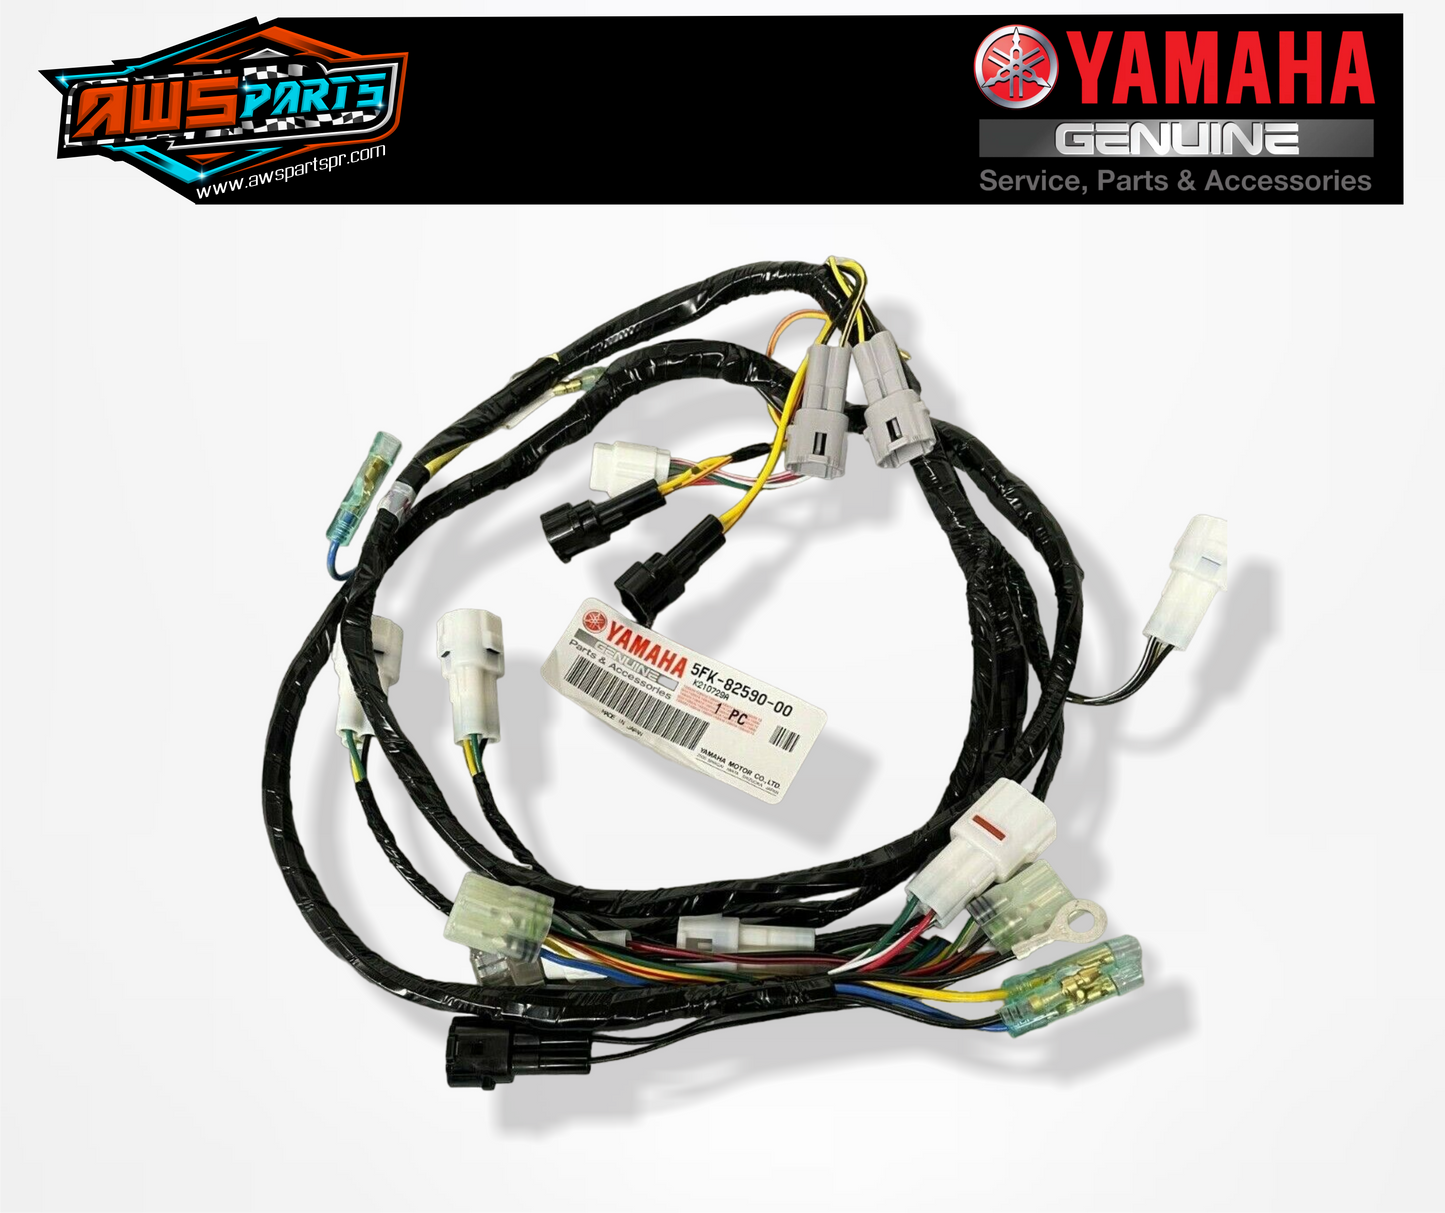 Yamaha Banshee 350 Wire Harness